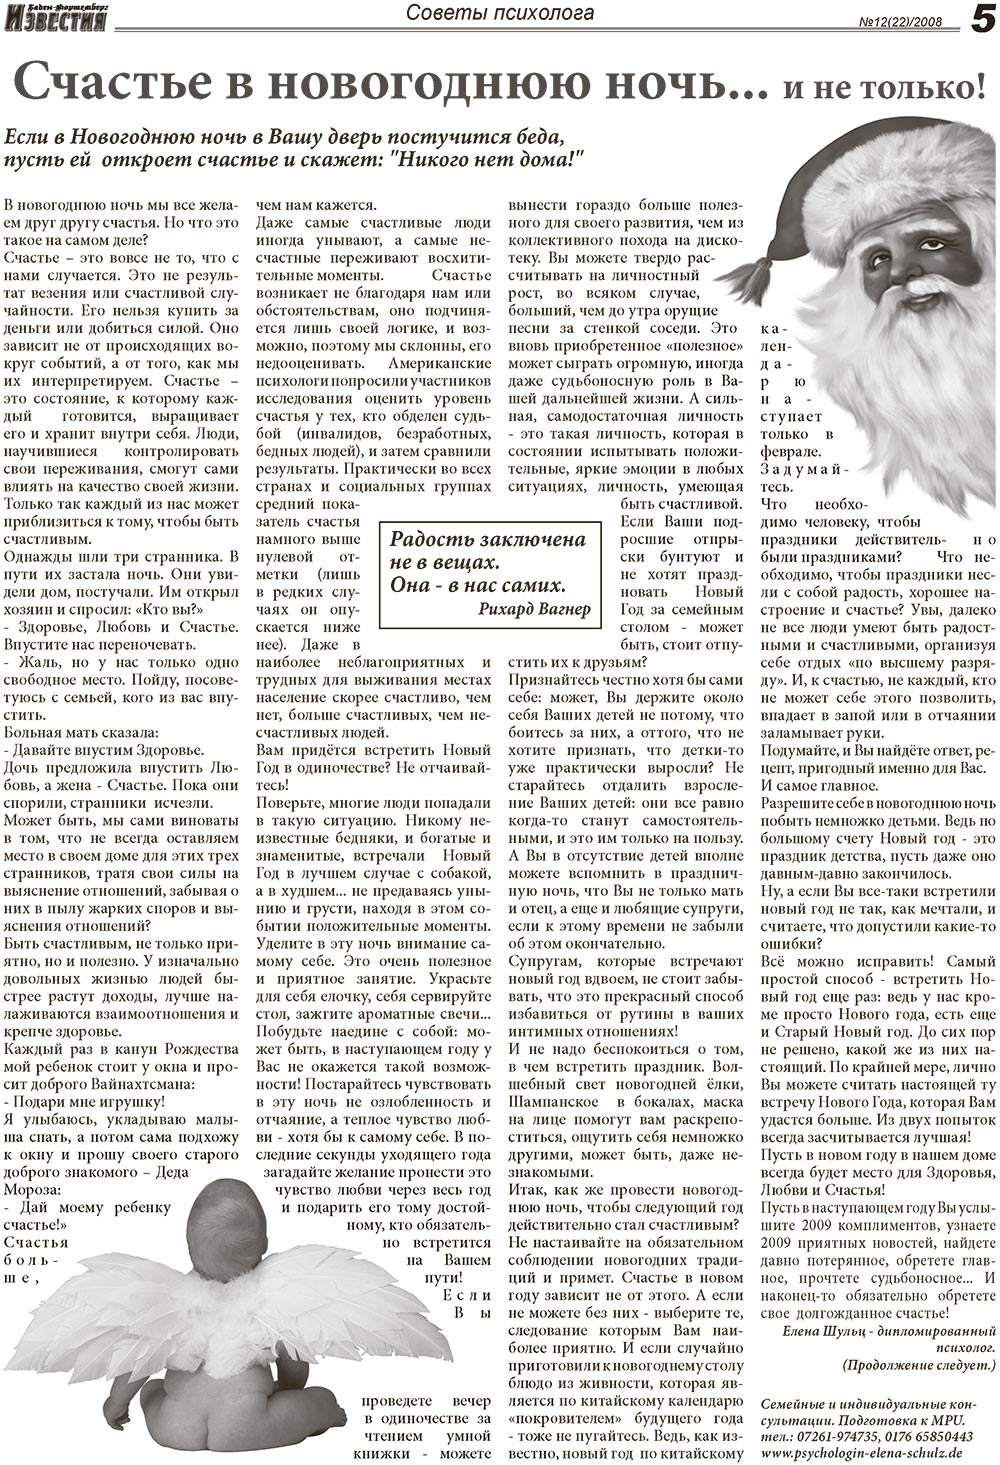 Известия BW (газета). 2008 год, номер 12, стр. 5